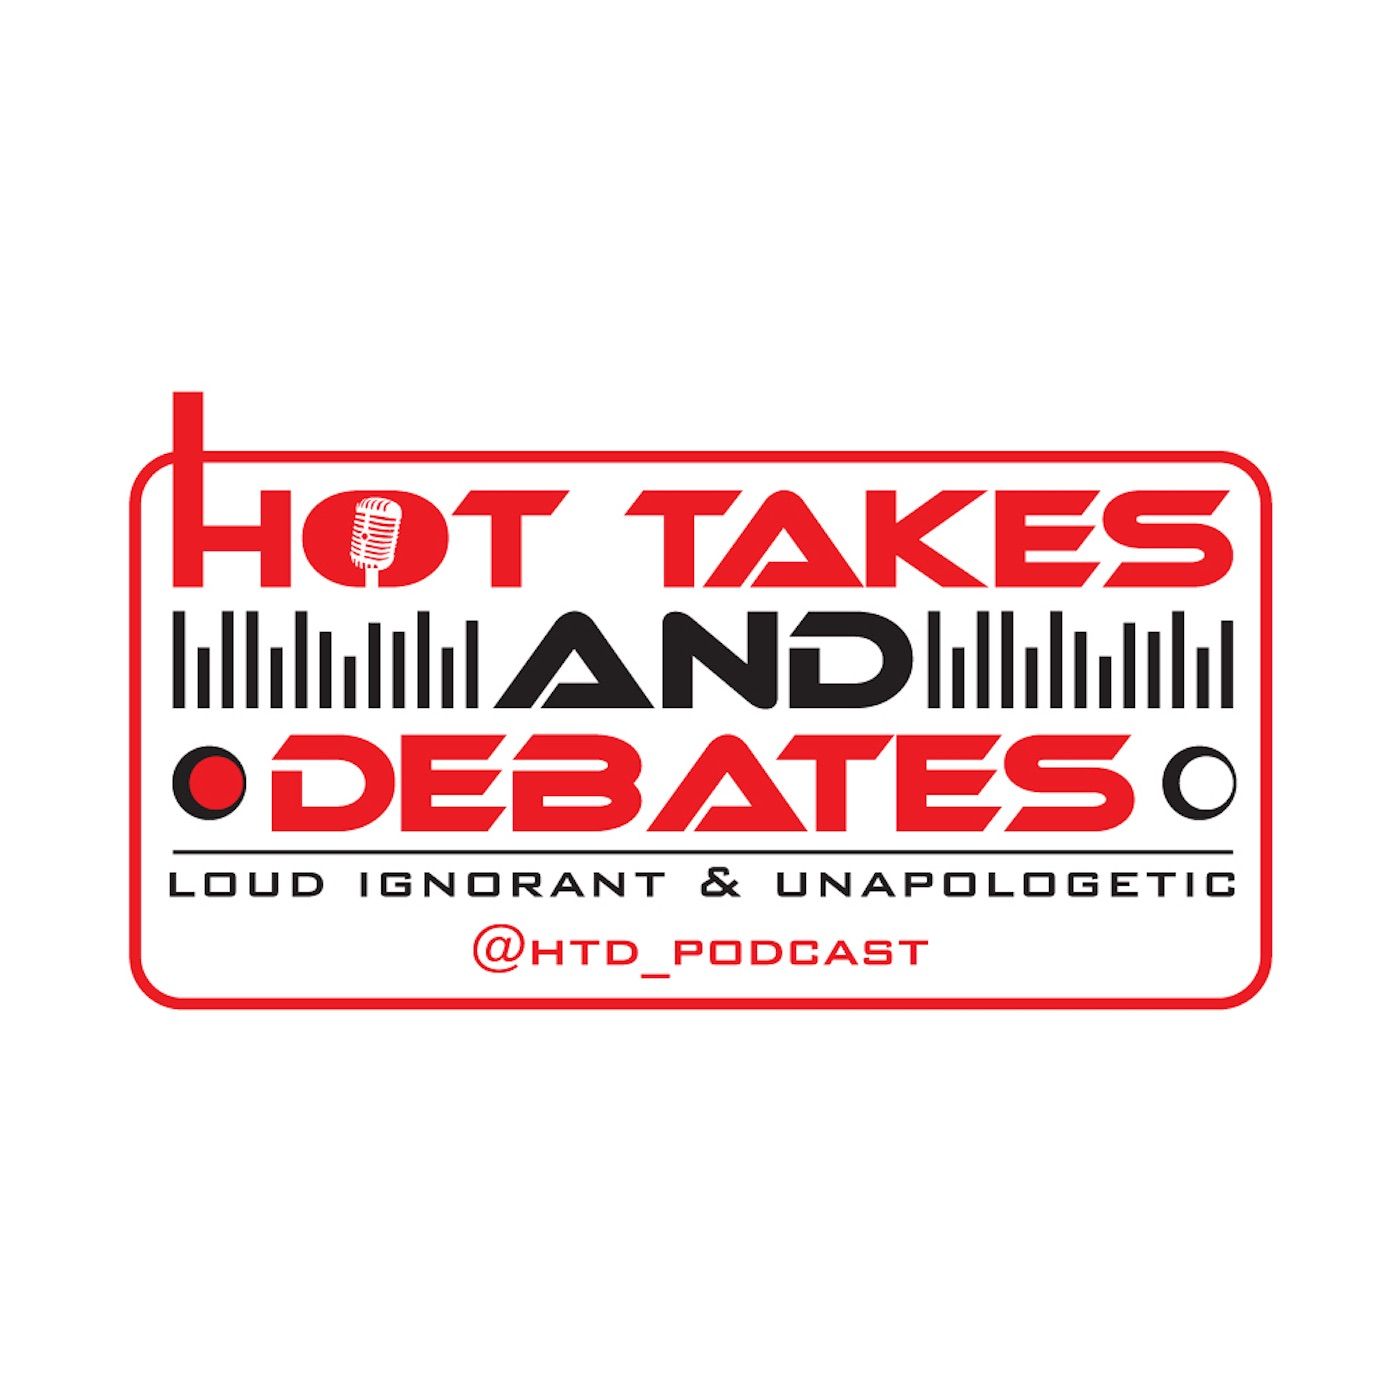 Hot Takes and Debates: Loud Ignorant & Unapologetic